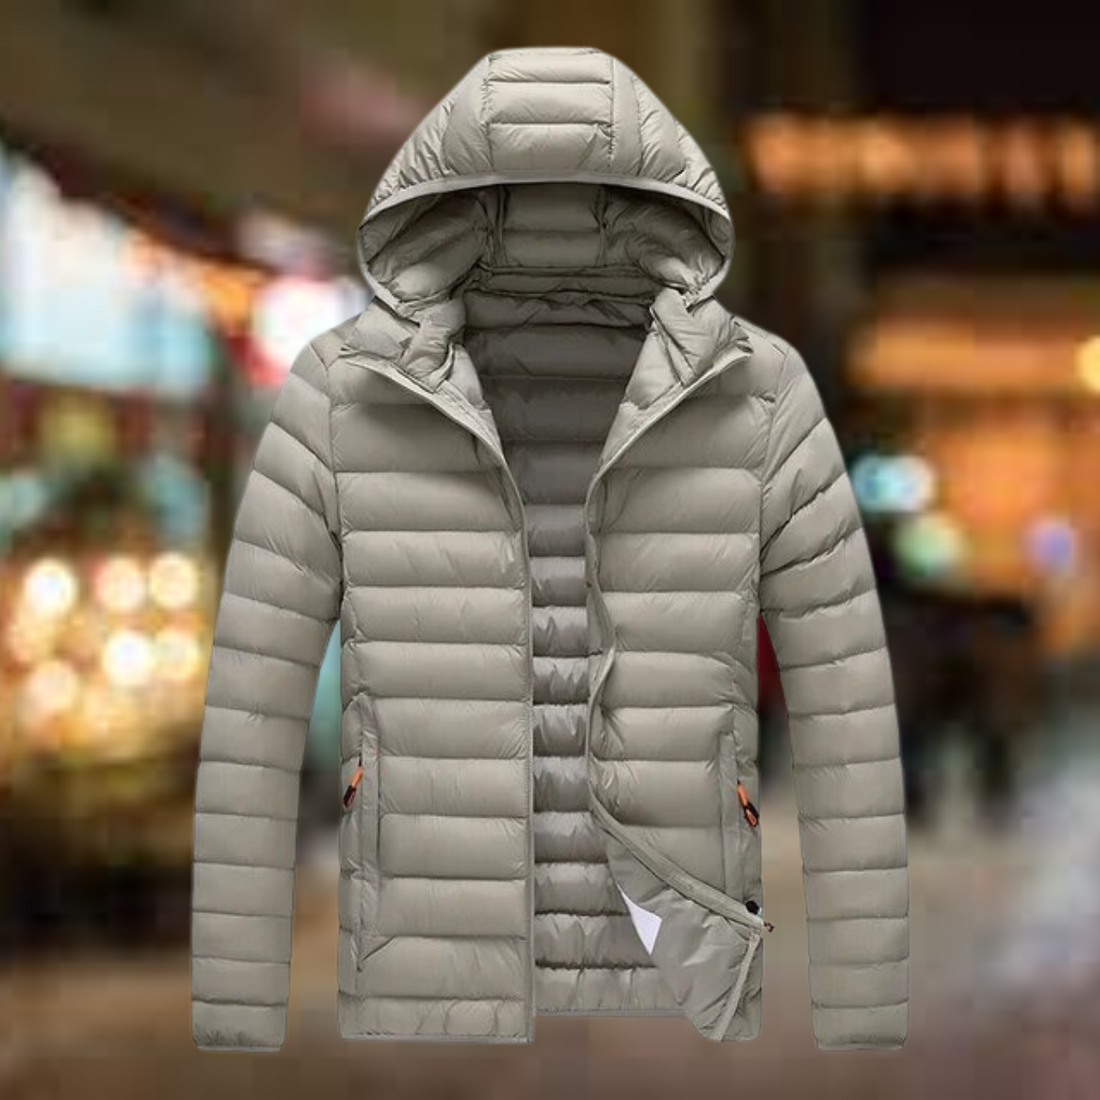 Albern - Waterproof Casual Jacket with Detachable Hood